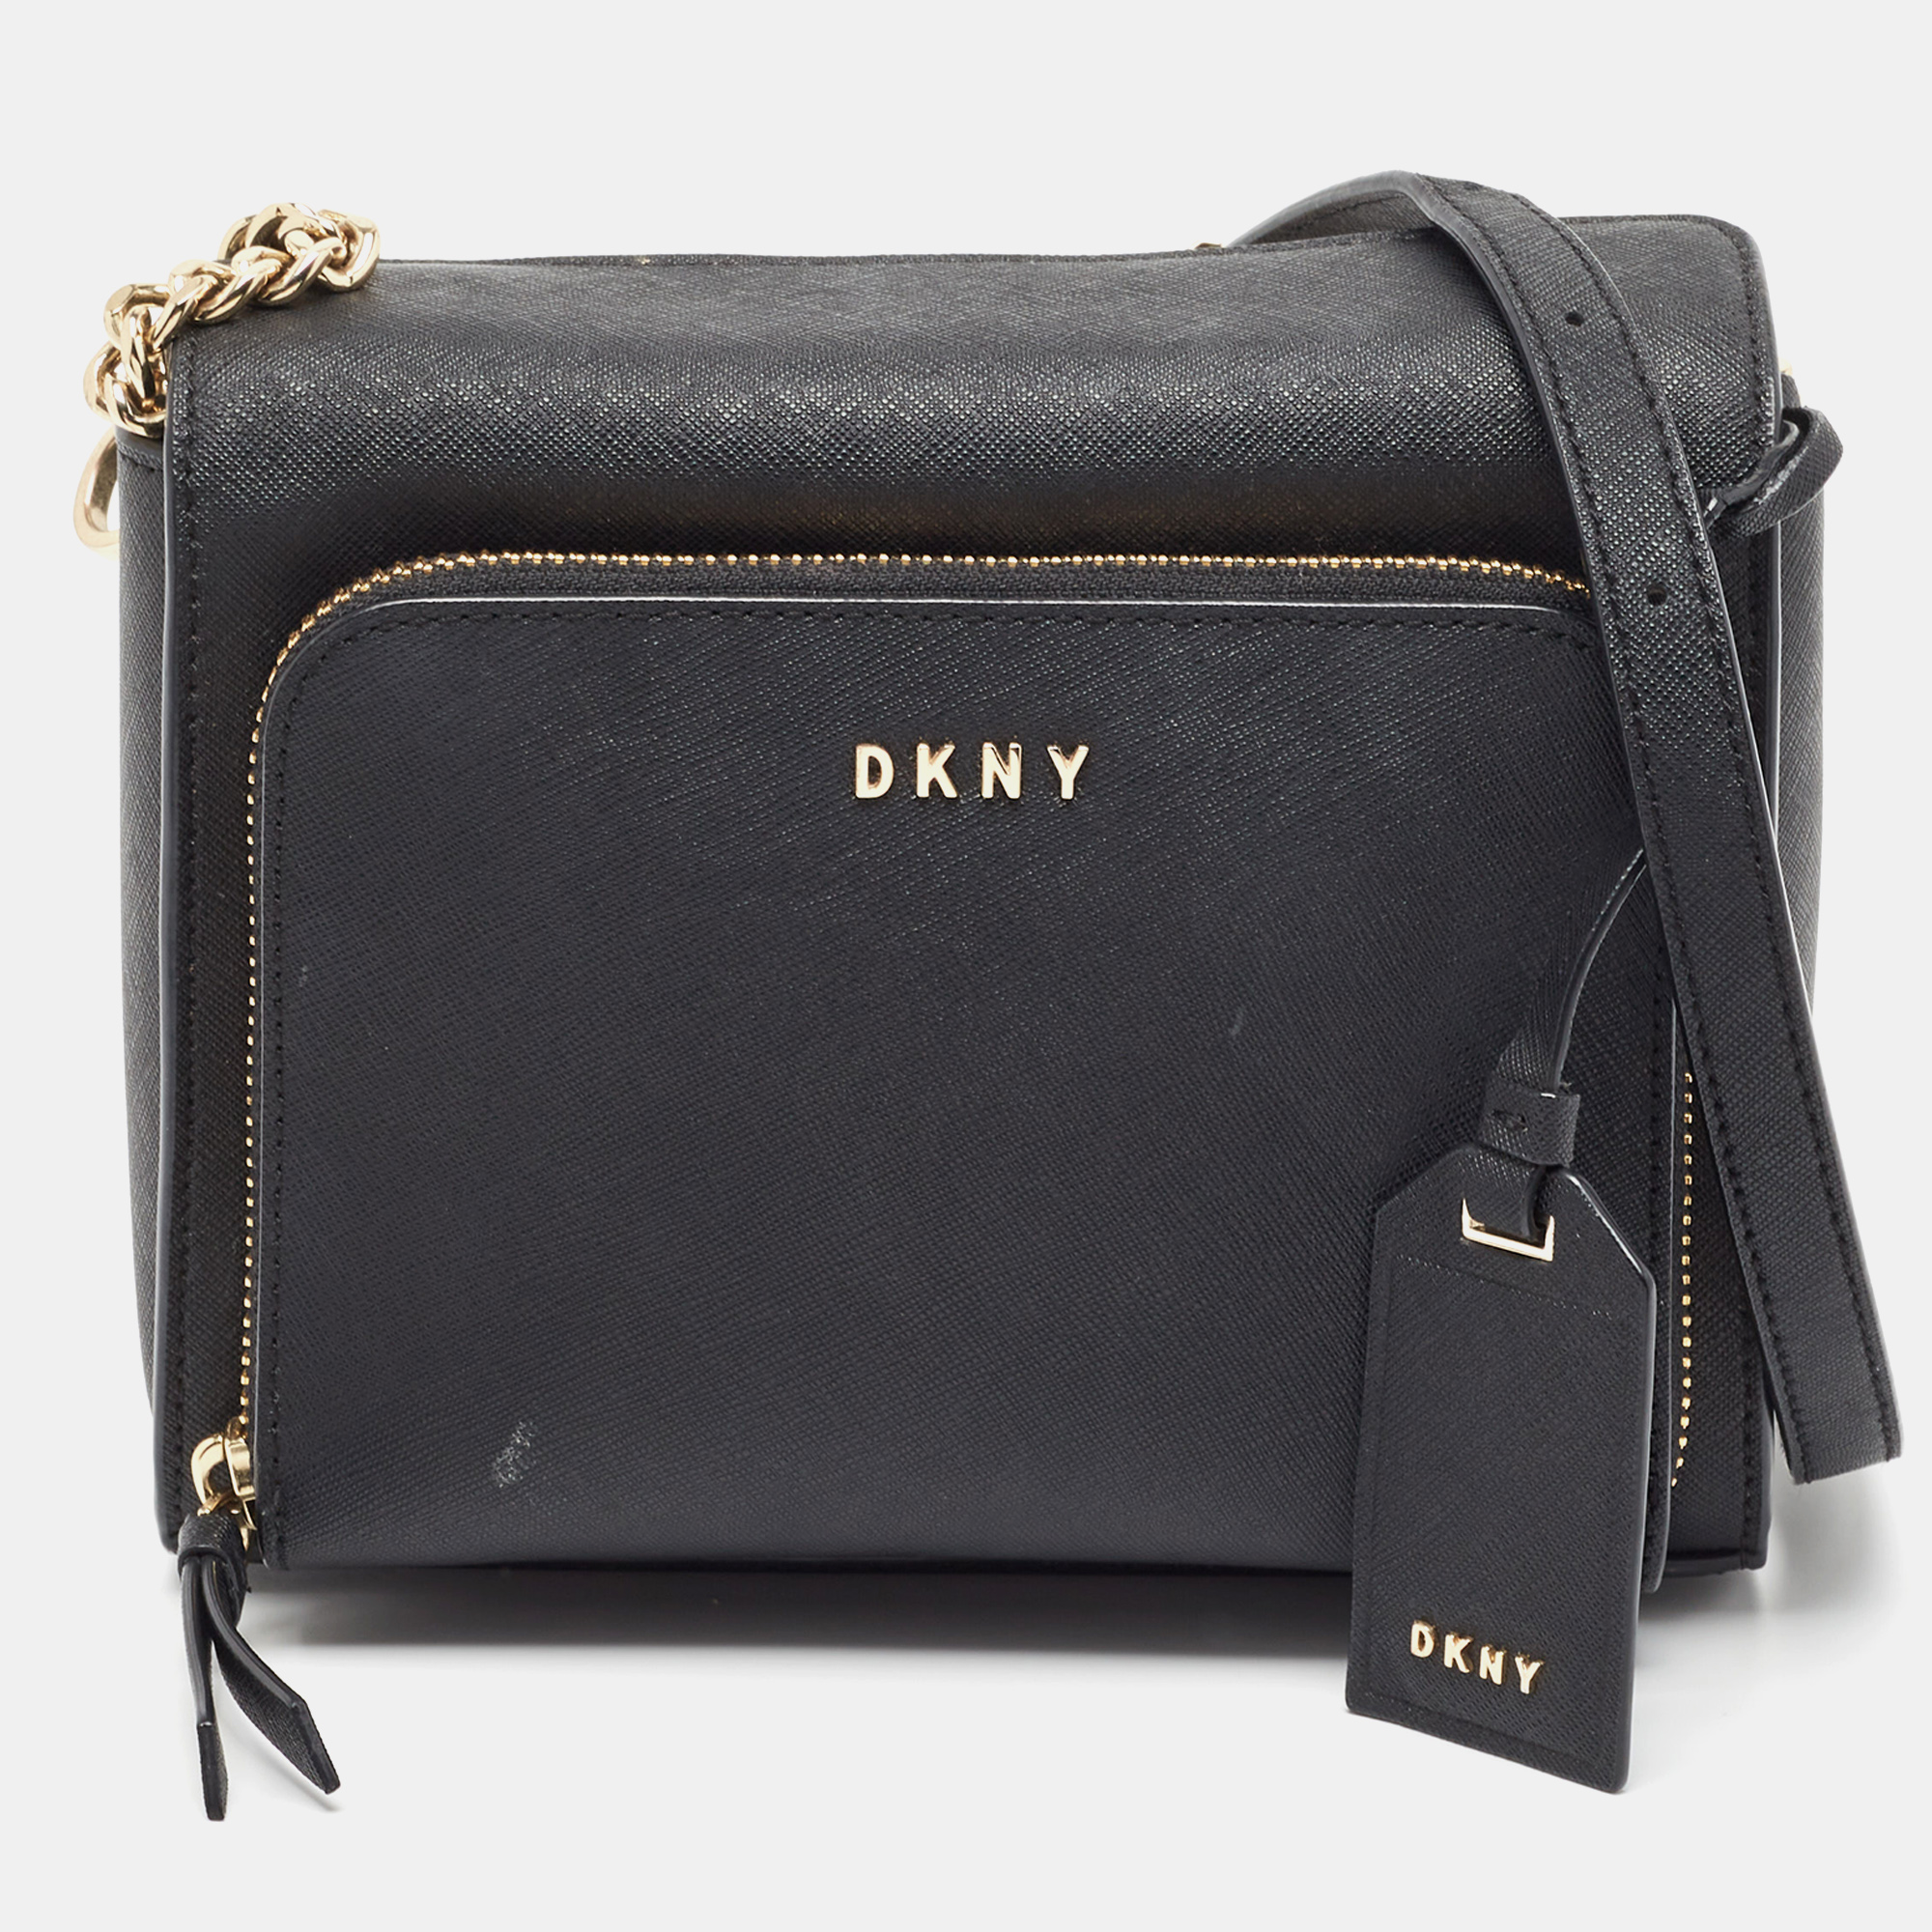 DKNY Black Leather Front Zip Crossbody Bag